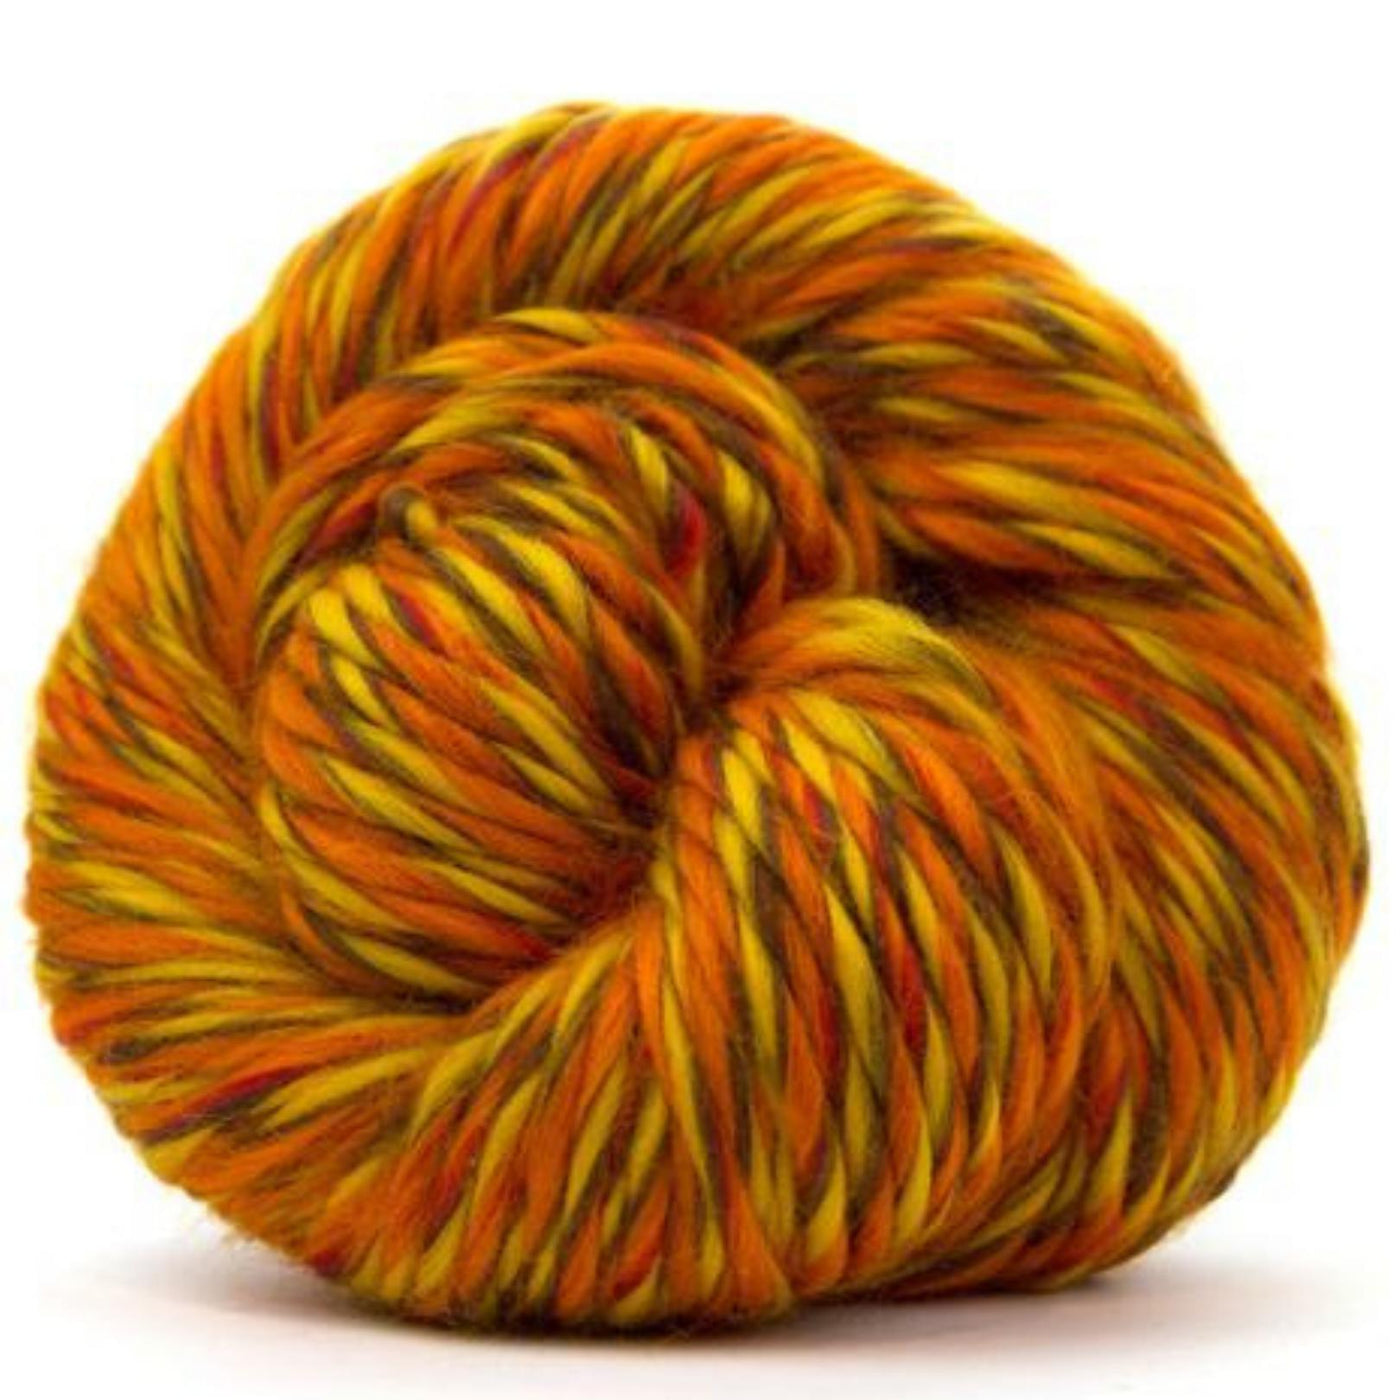 Premium Super Bulky (Chunky) Weight Multicolored Merino Yarn-Yarn-Revolution Fibers-Blaze Orange-Revolution Fibers